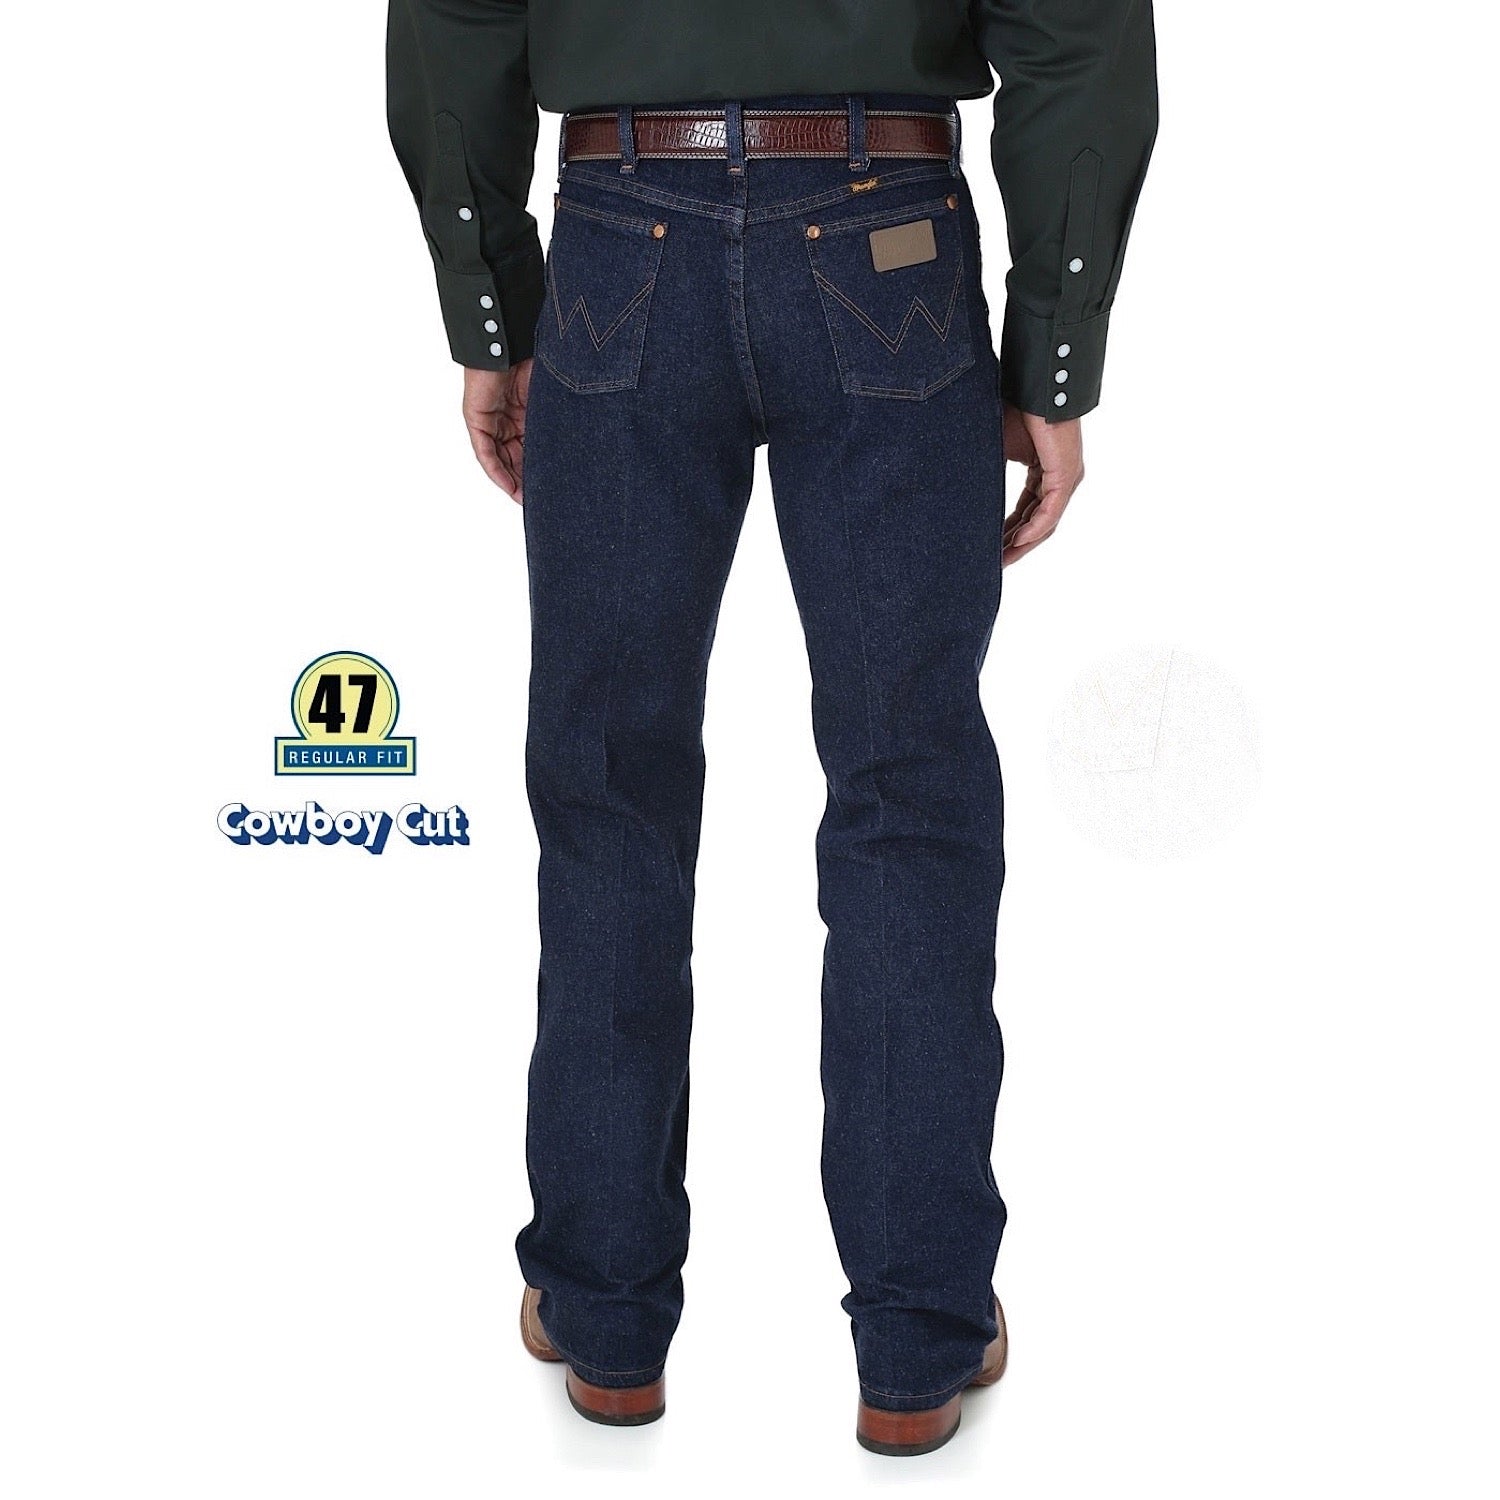 Buy Wrangler Mens Cowboy Cut Stretch Reg Fit Jean Navy - The Stable Door